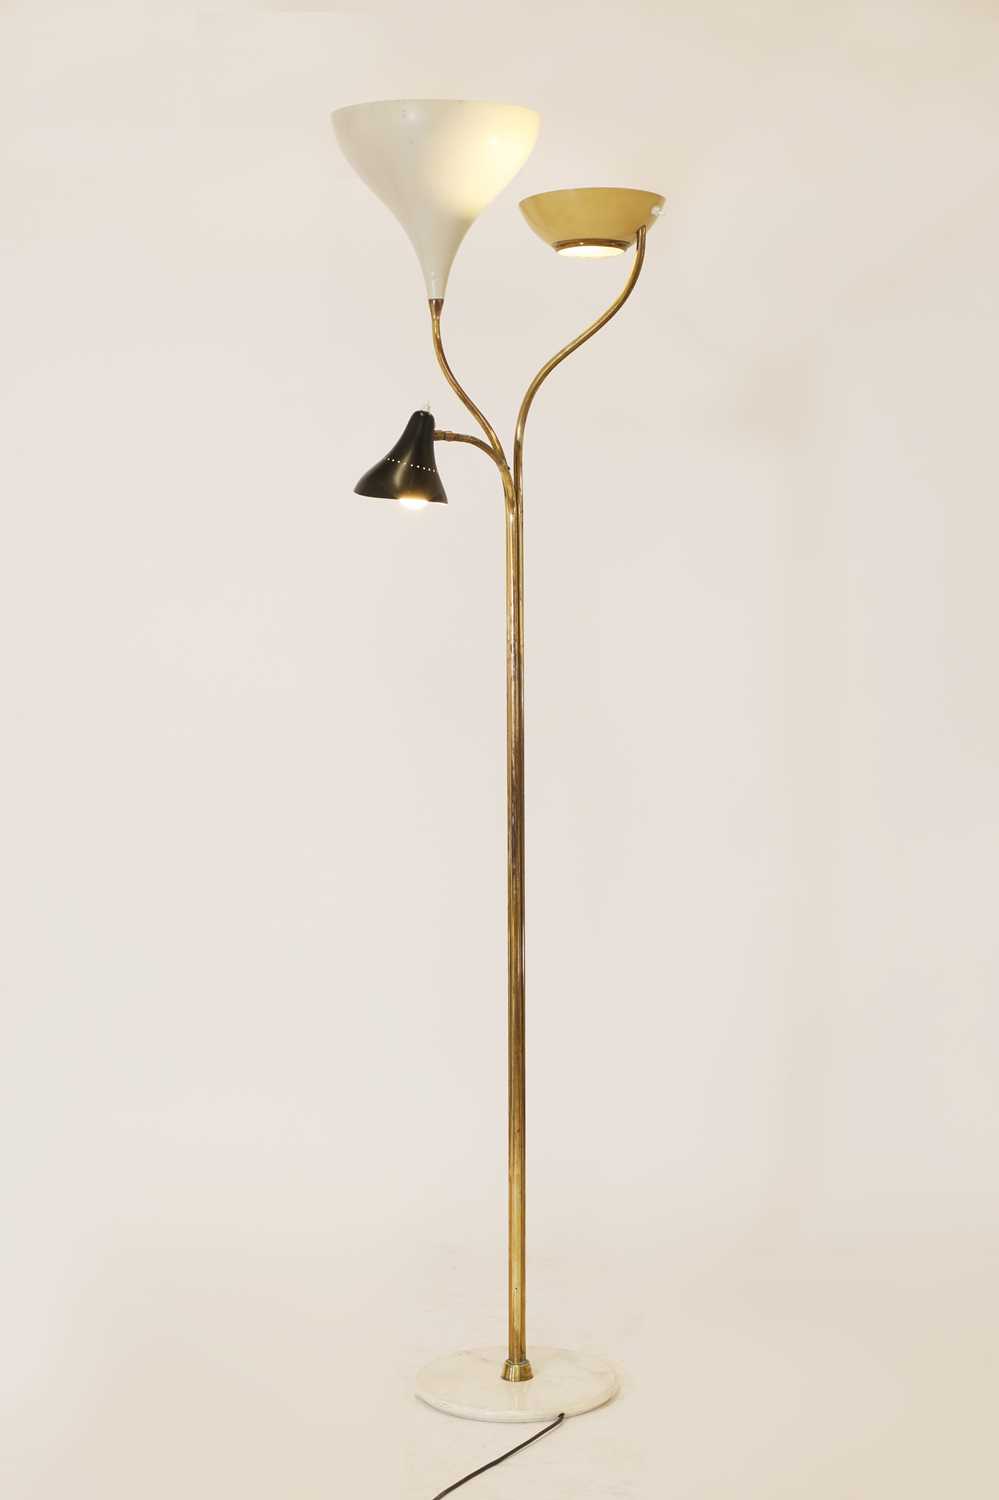 An Italian modernist standard lamp, - Image 2 of 2